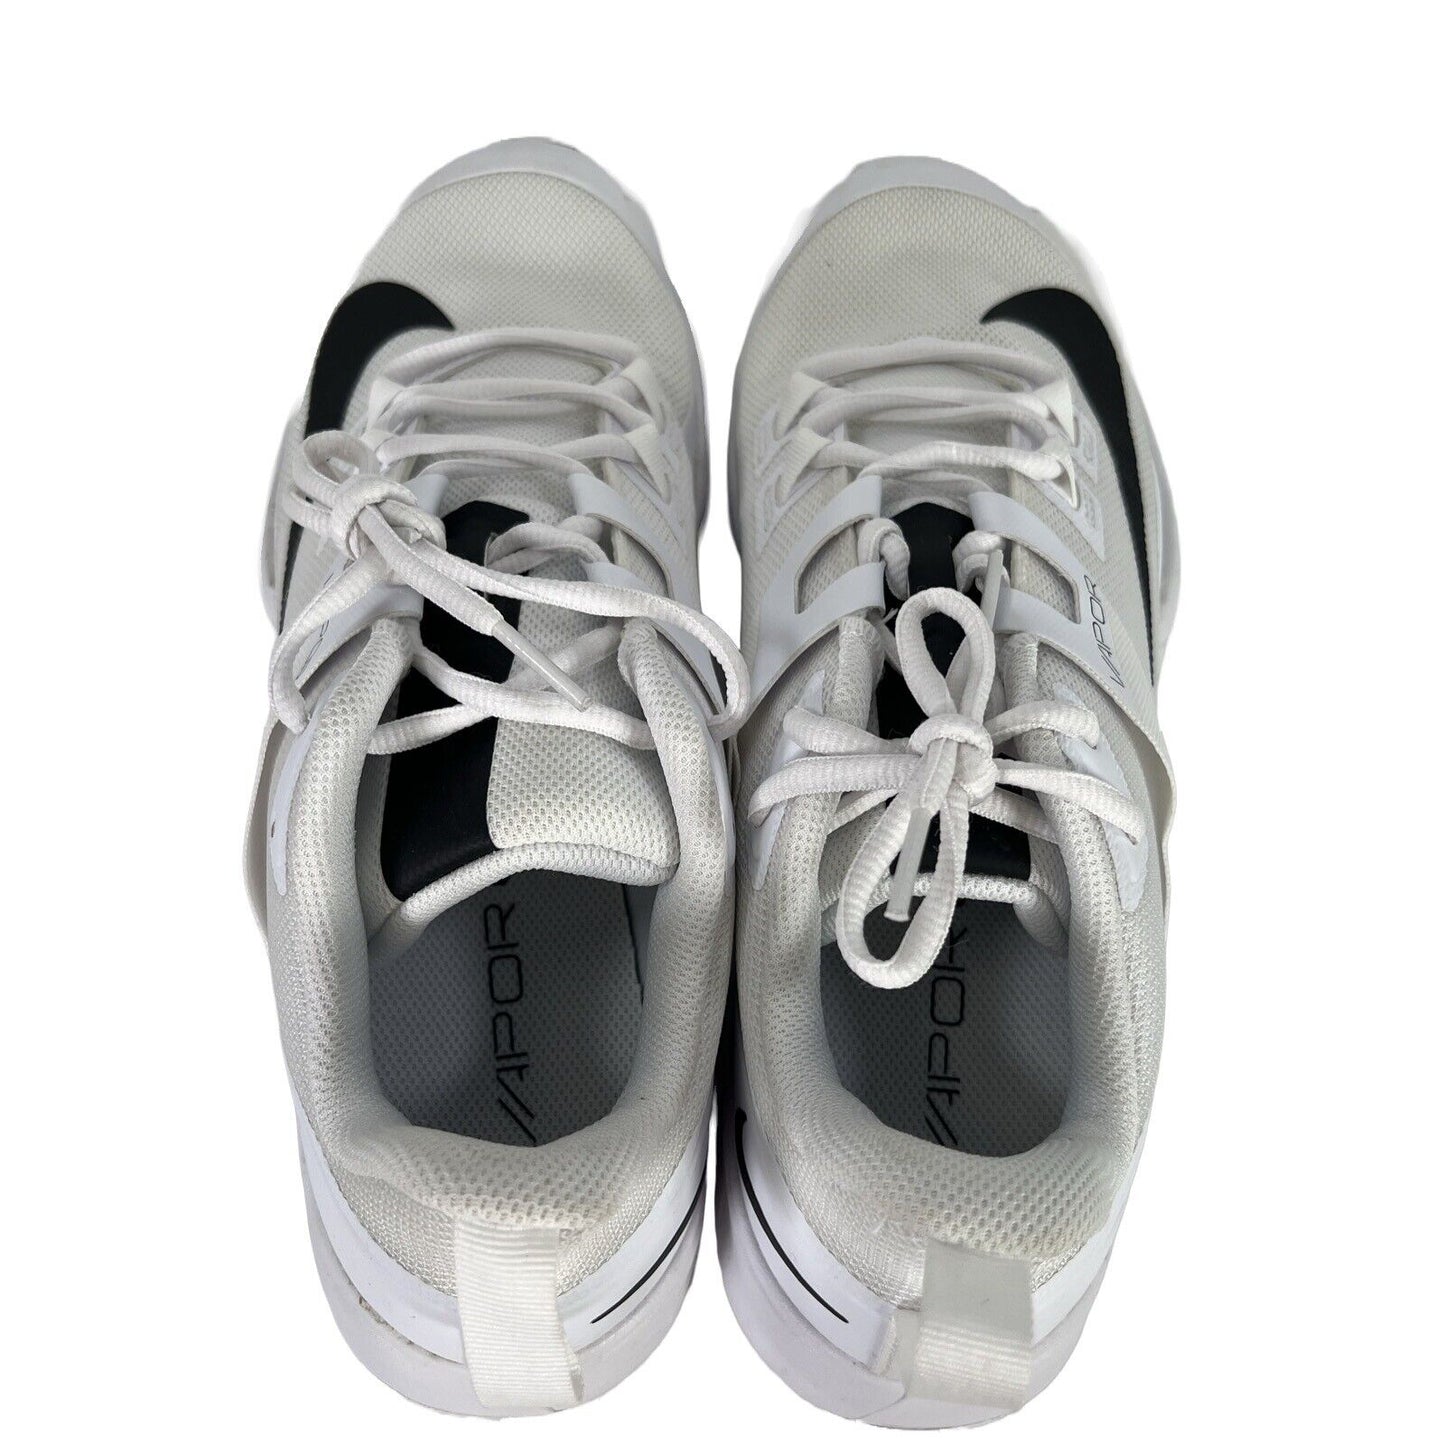 Nike Men's White Vapor Lite HC Lace Up Athletic Sneakers - 10